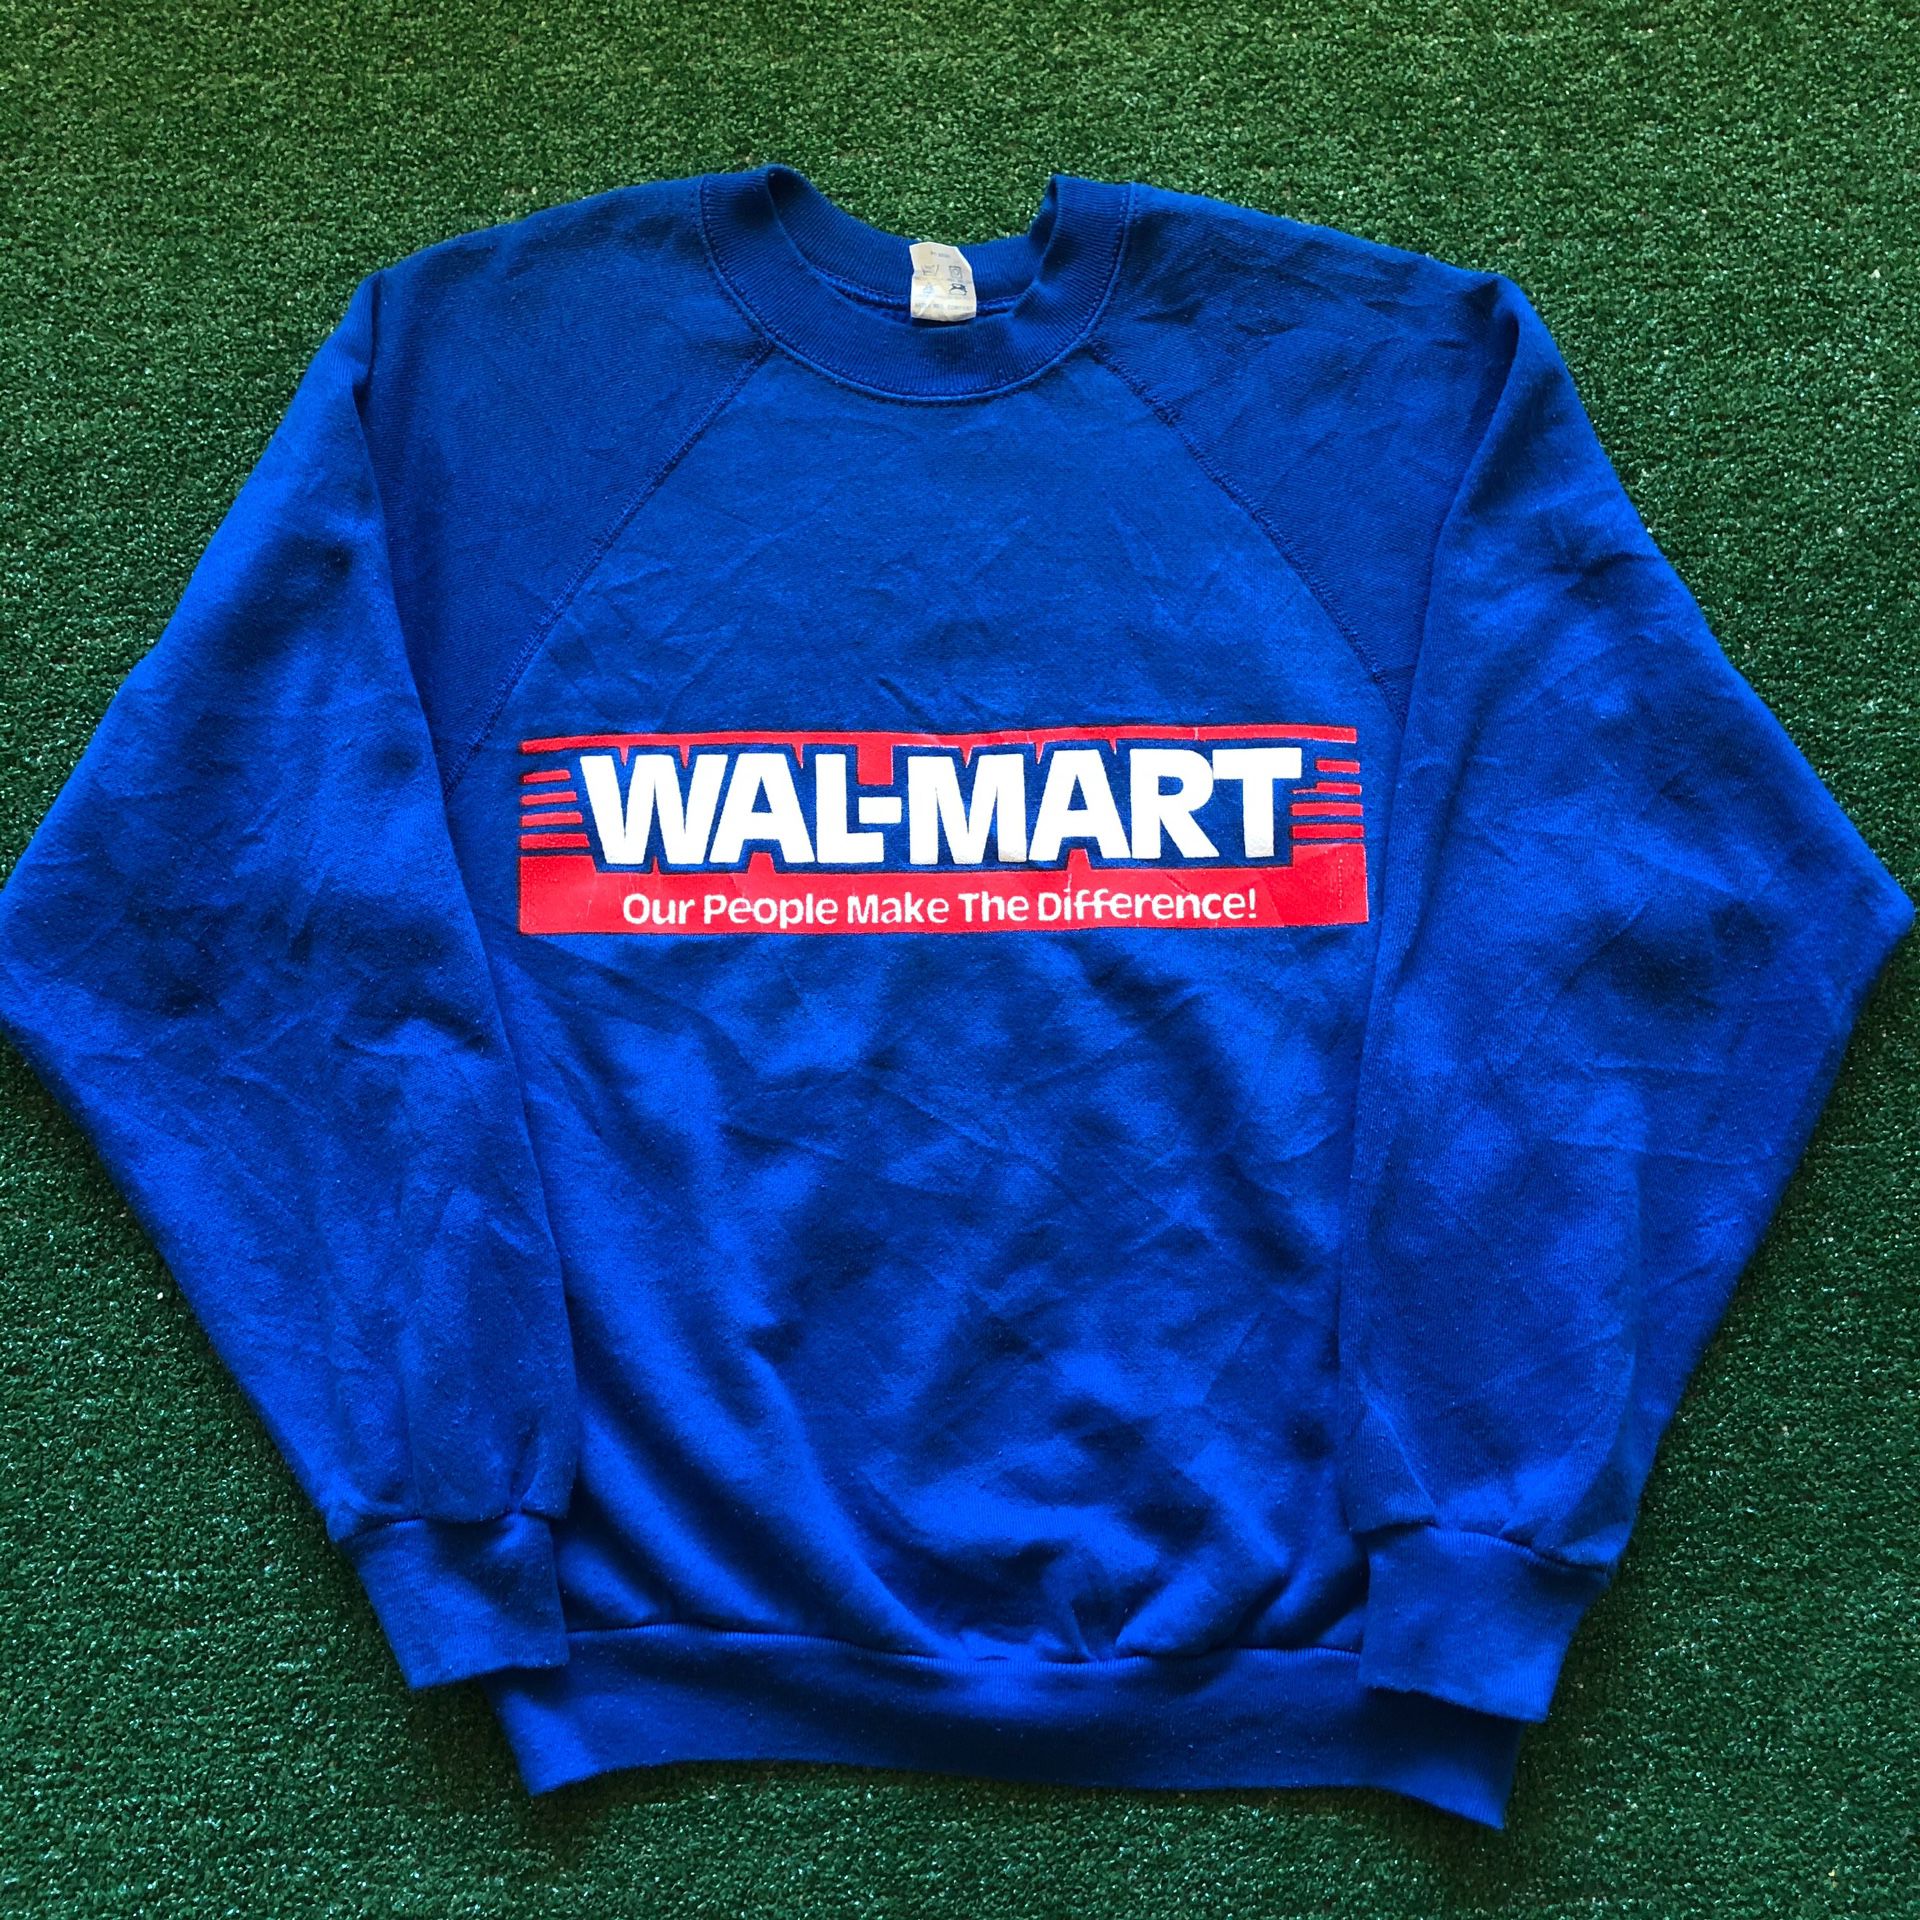 Vintage Wal-Mart Sweatshirt